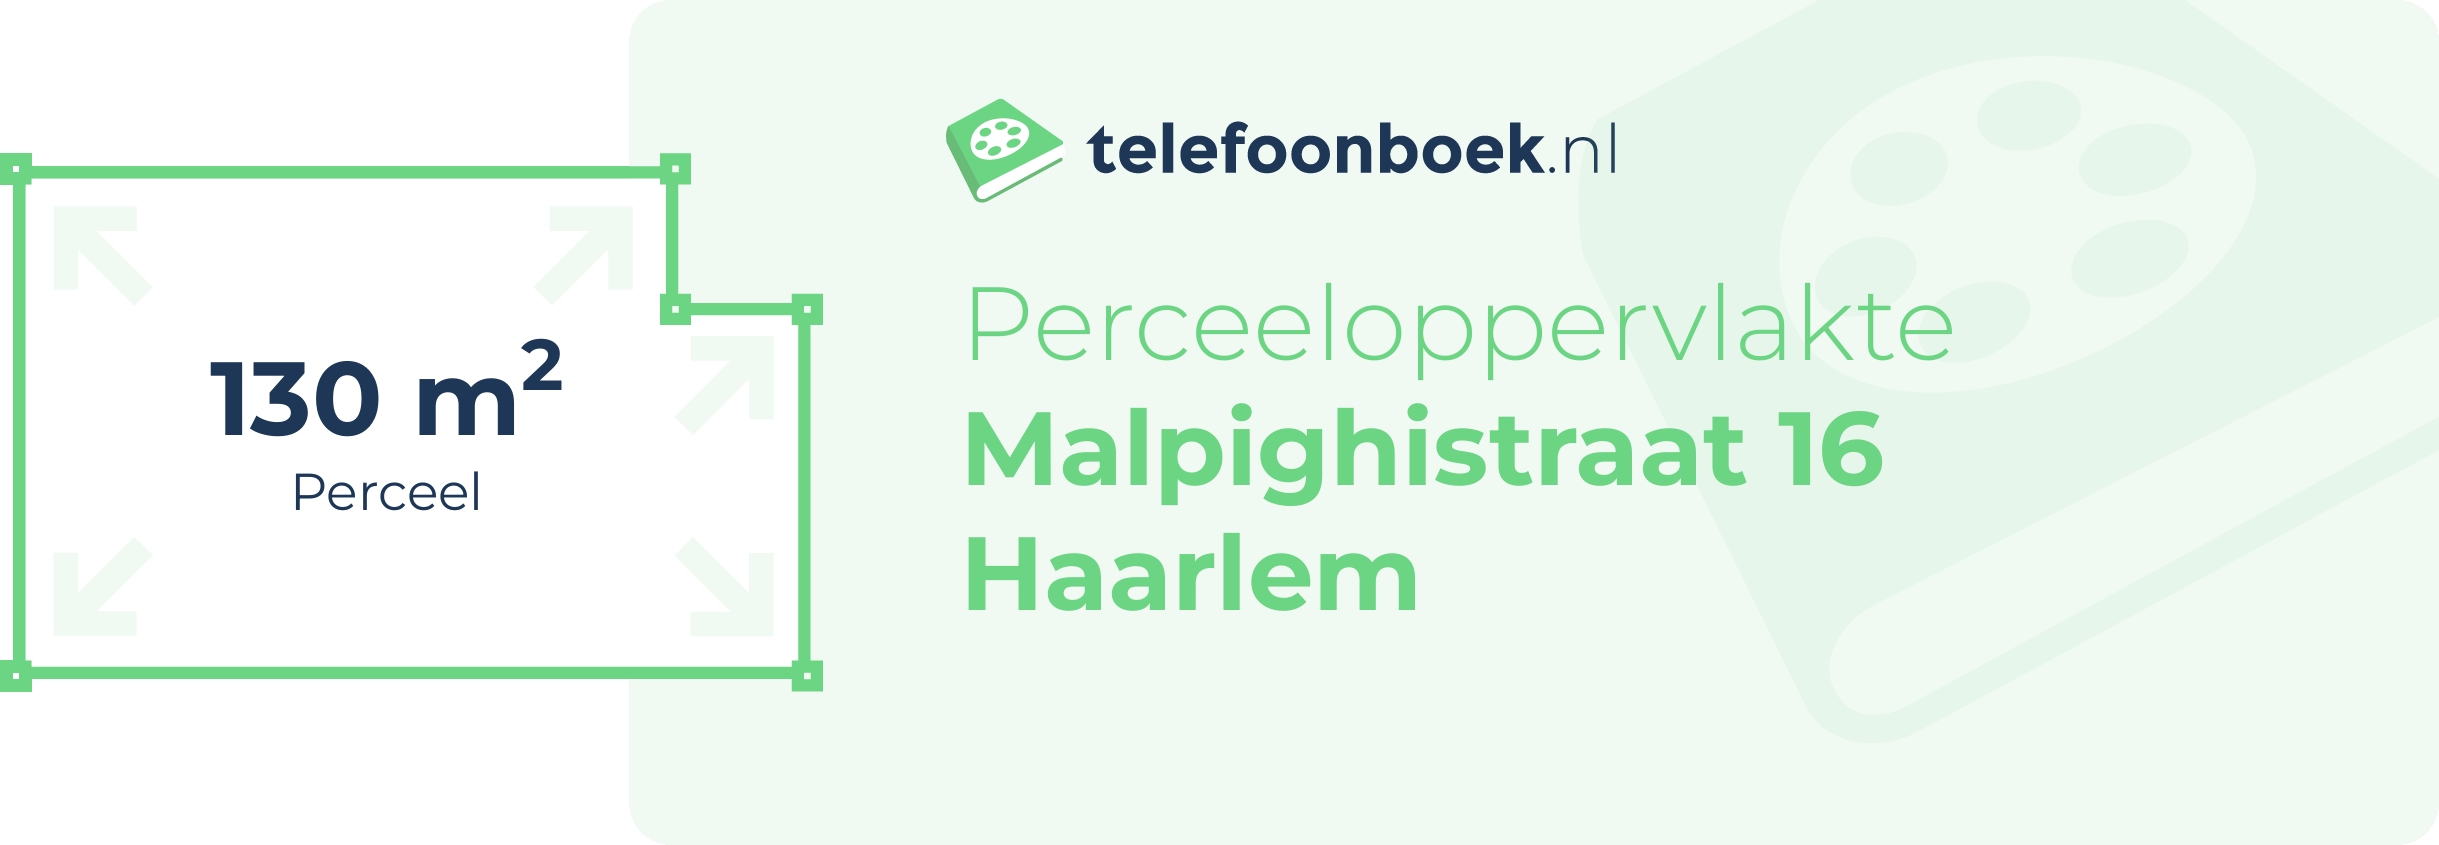 Perceeloppervlakte Malpighistraat 16 Haarlem